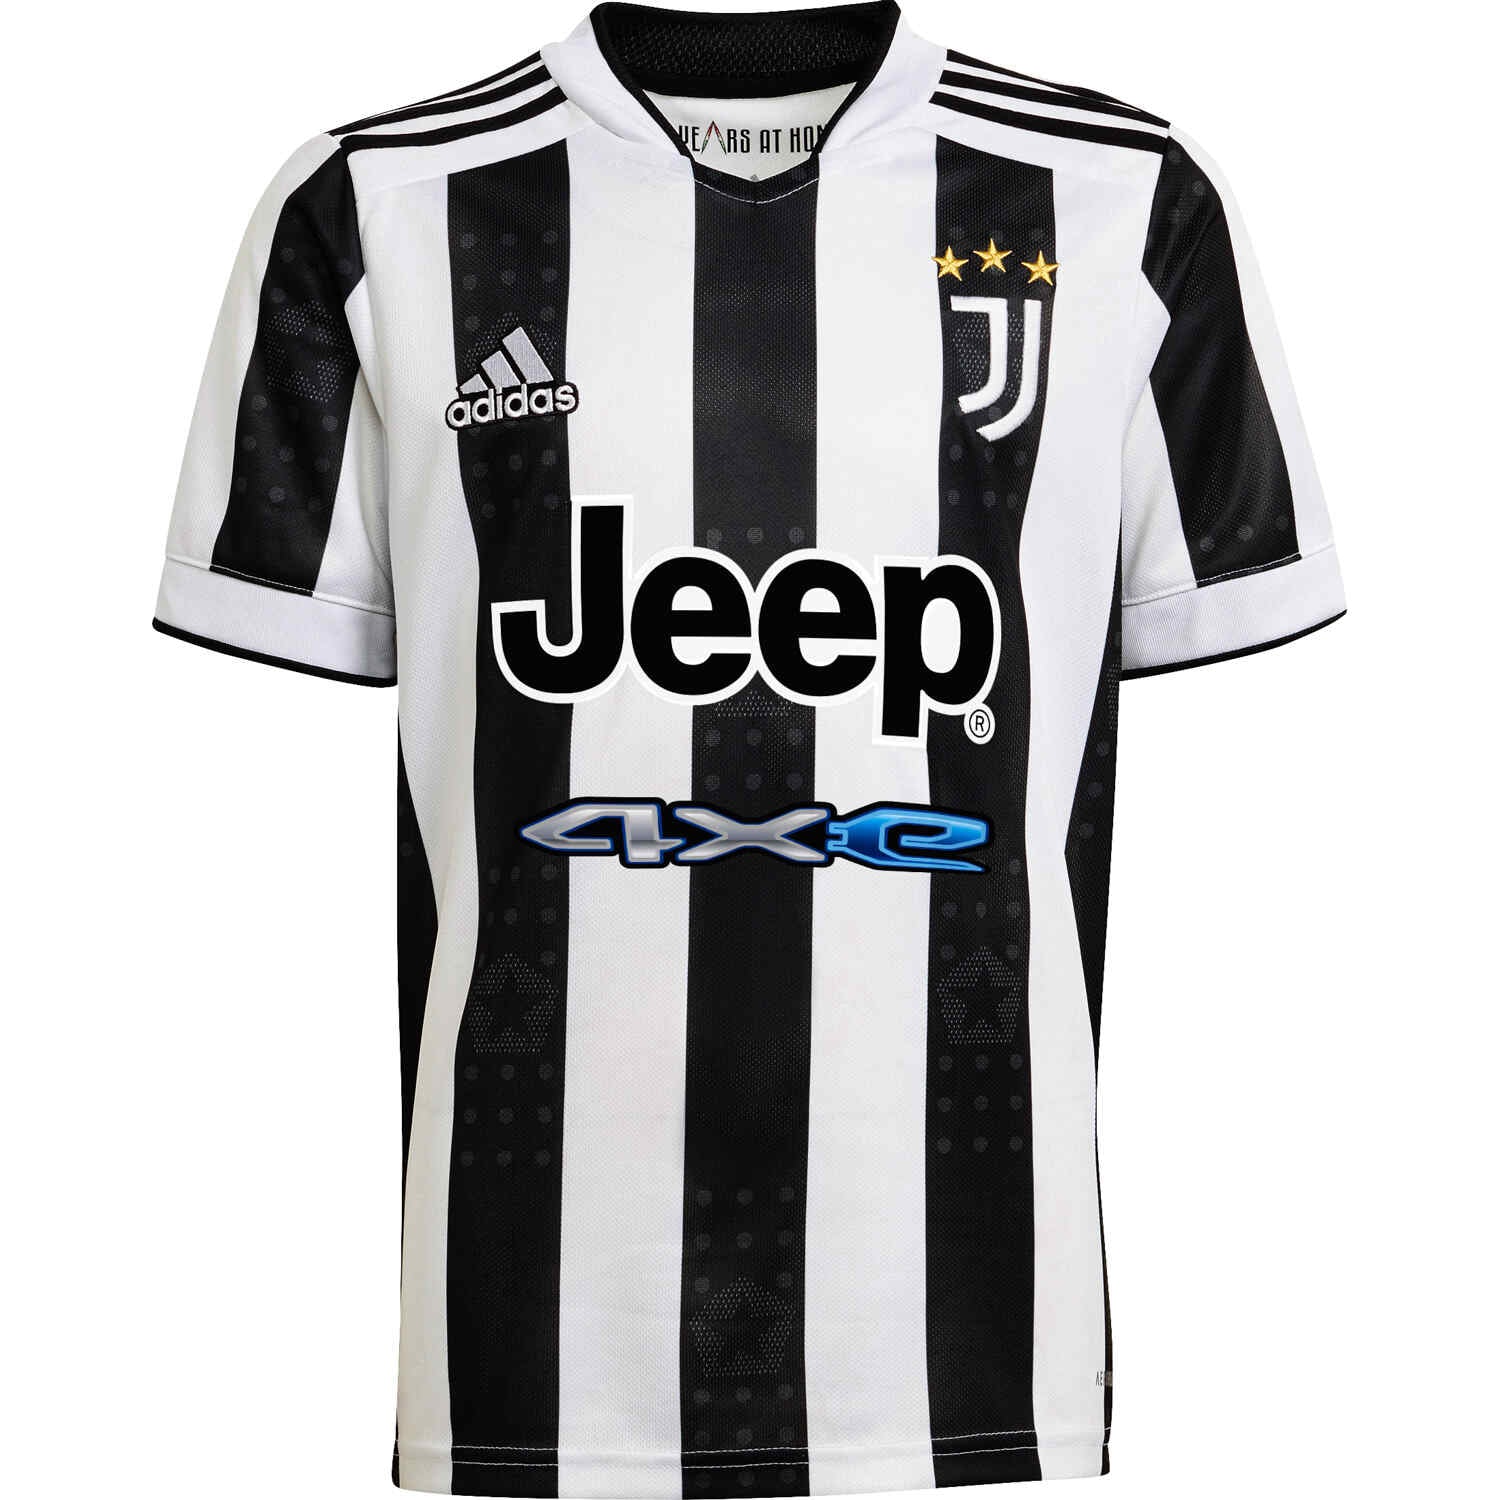 adidas Youth Juventus '21 Home Replica Jersey, Kids, Large, White